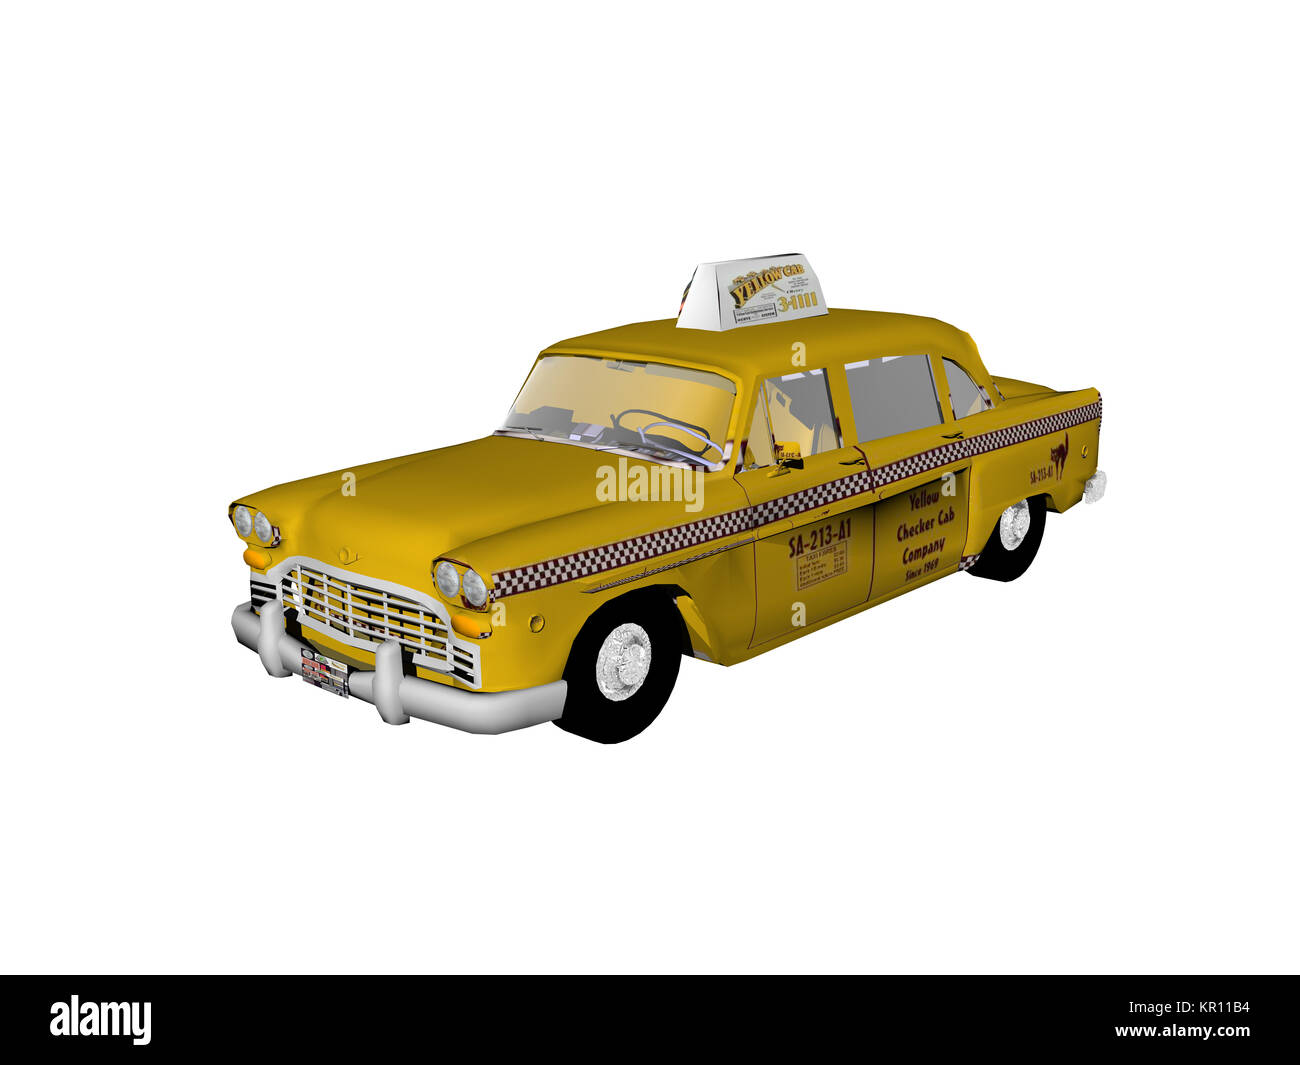 Gelbes Taxi Schild - Stock Image - Everypixel